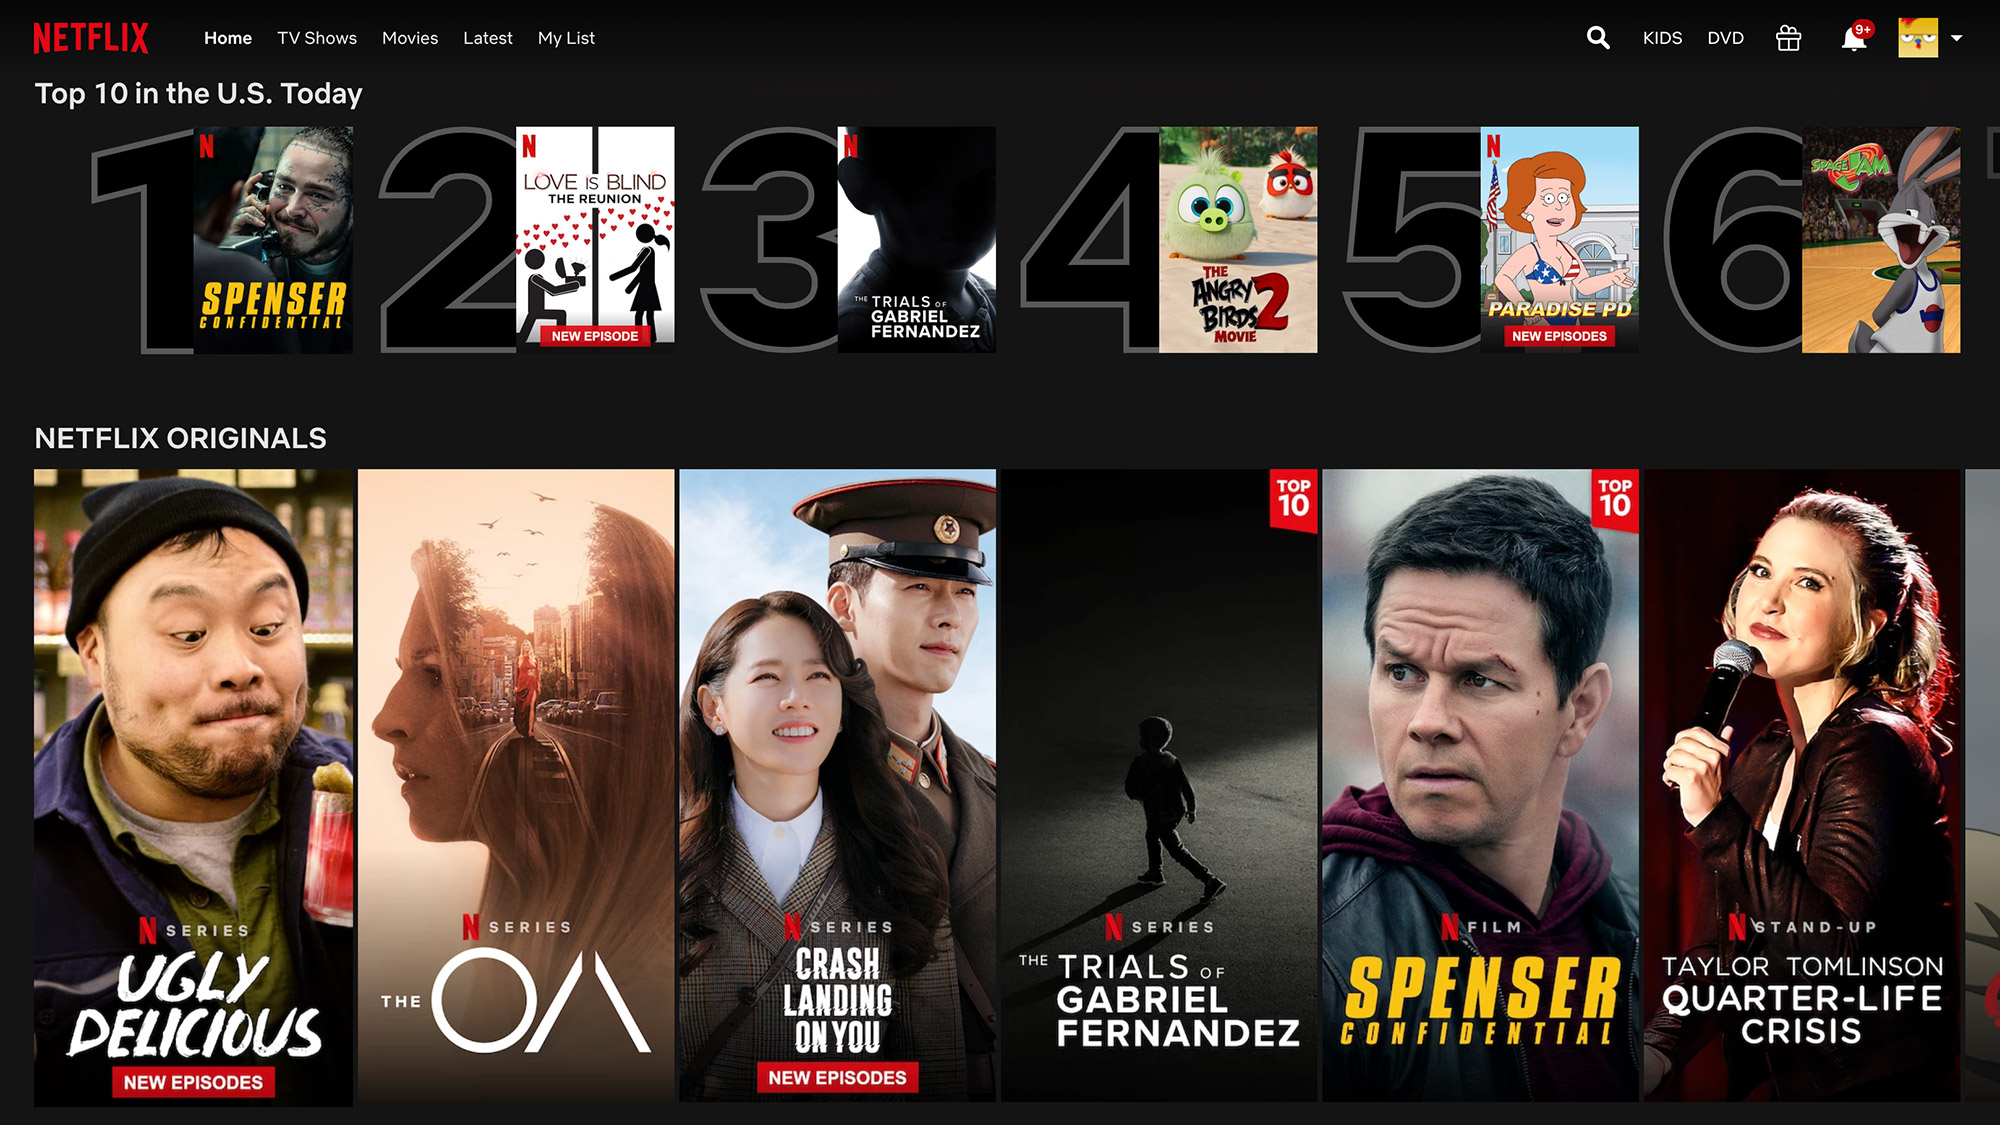 Netflix plans, prices, original content and more